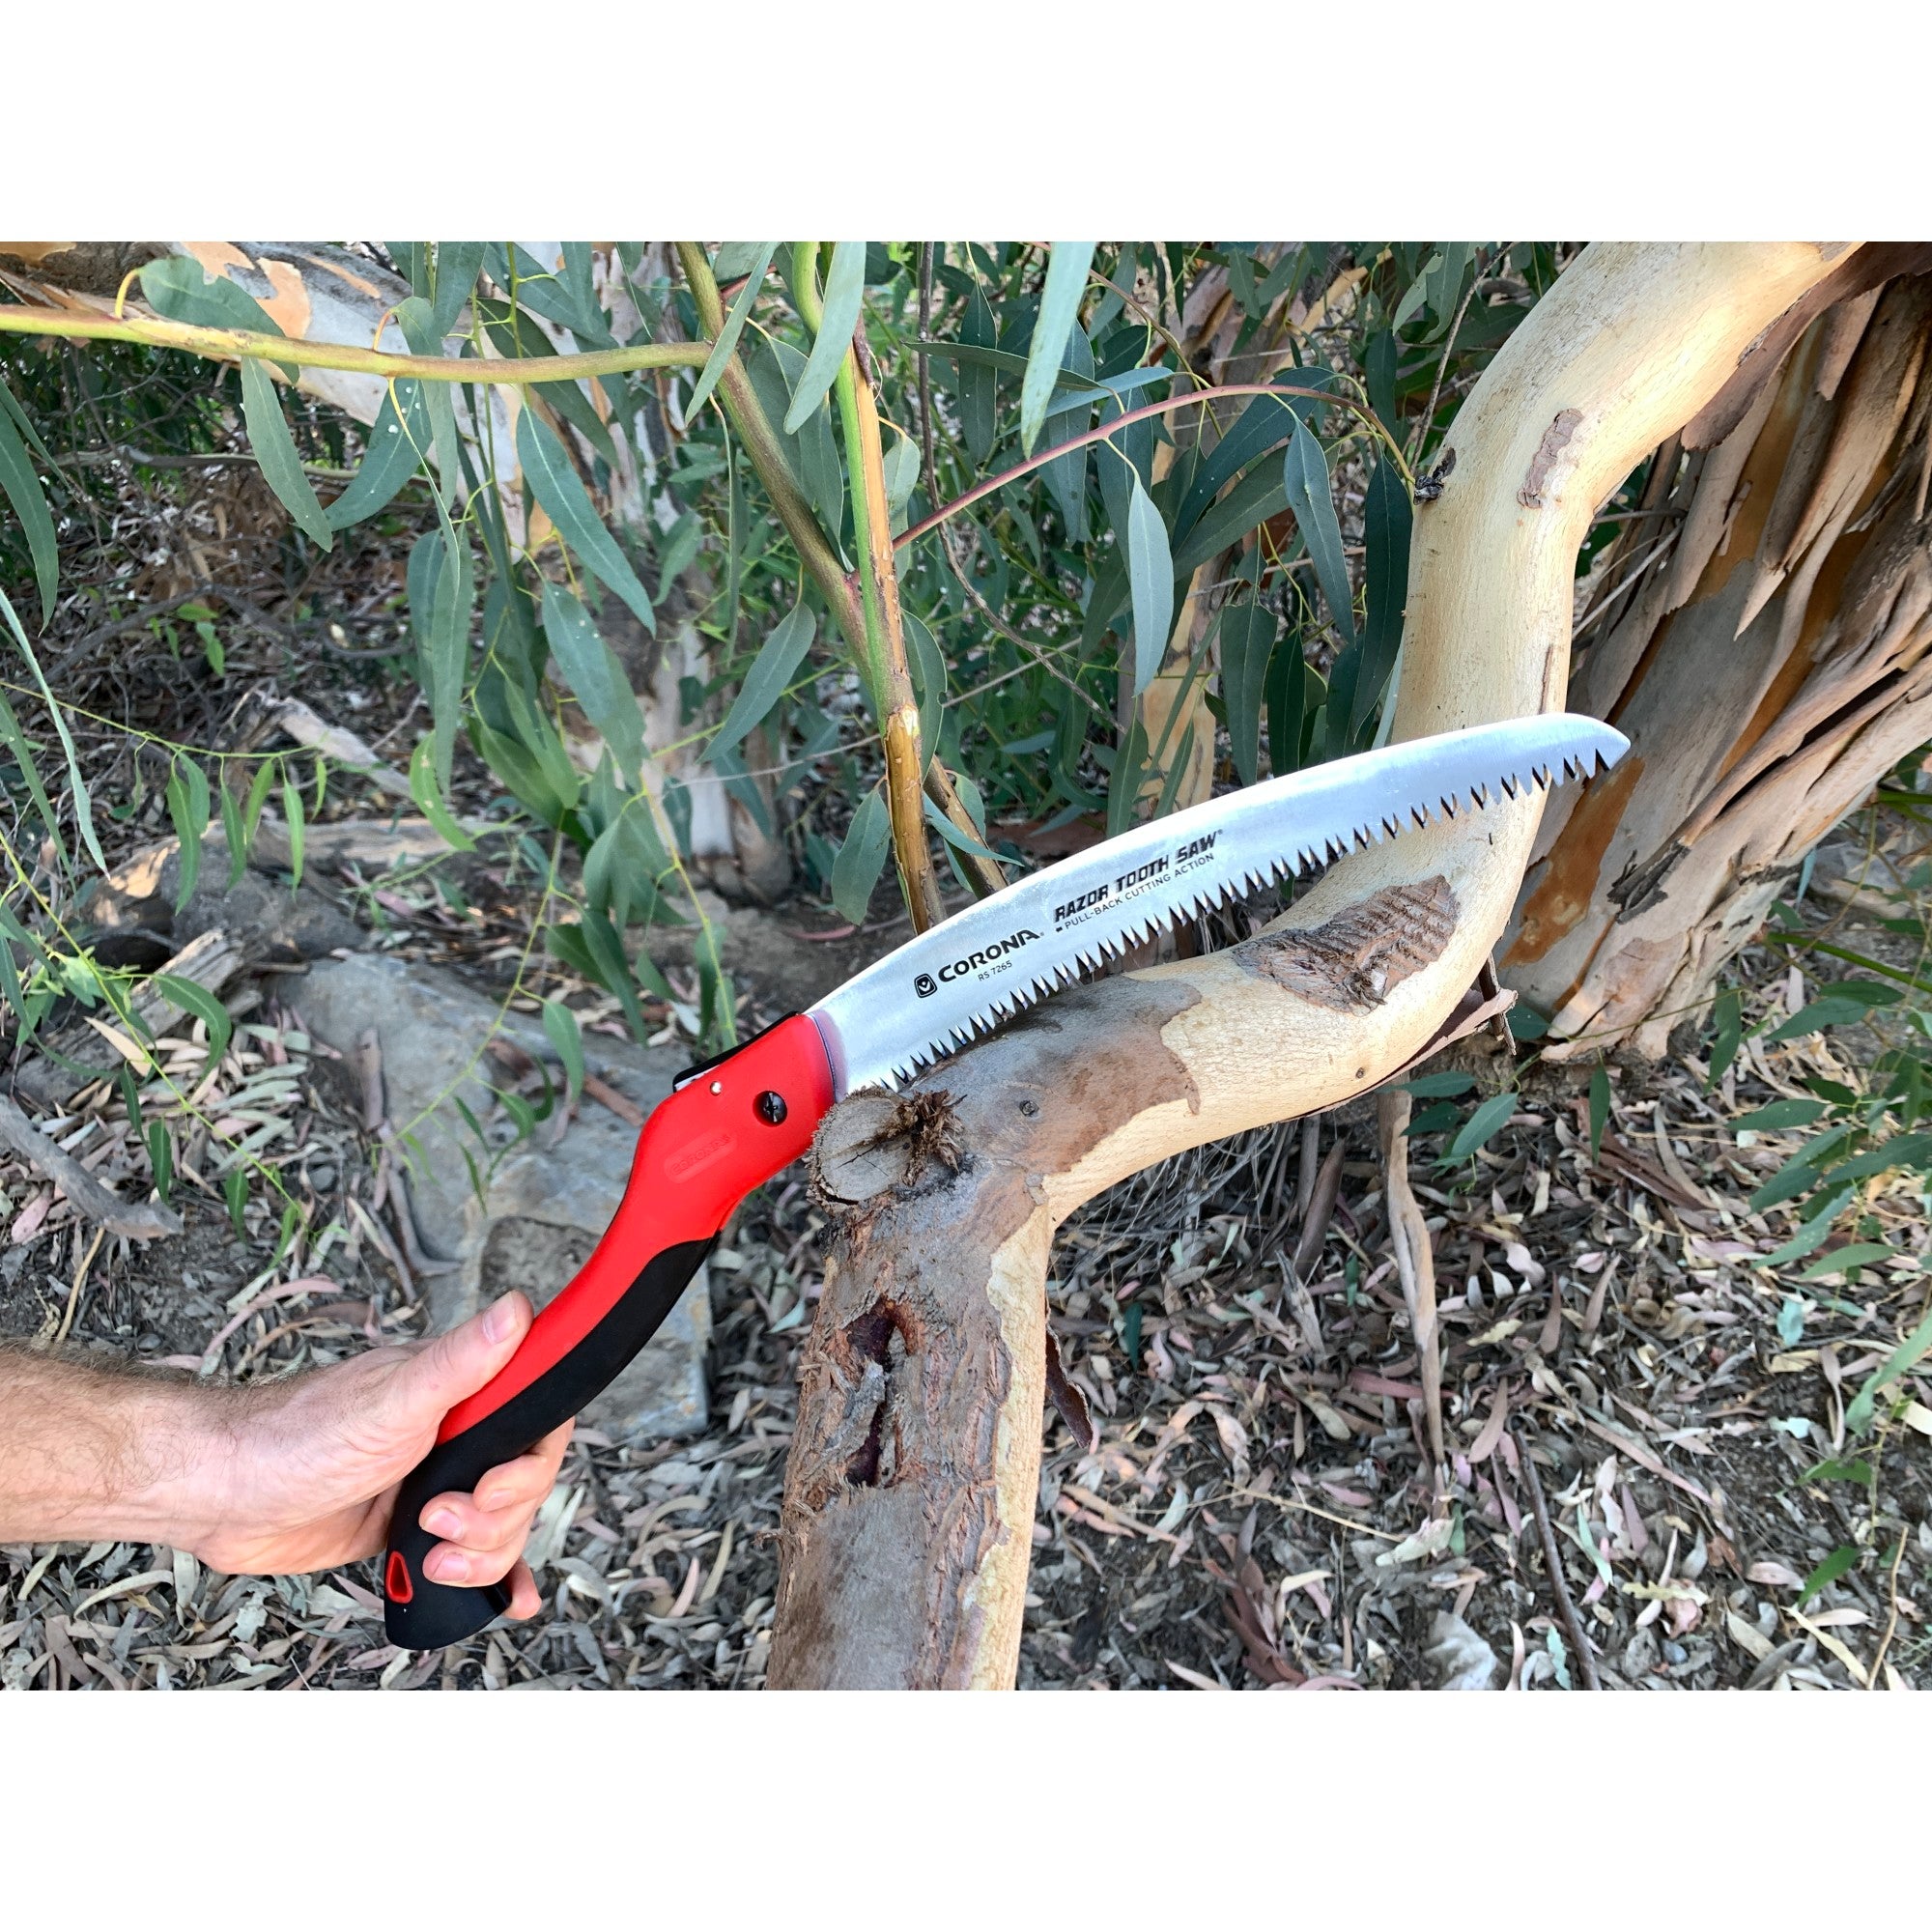 RazorTOOTH Saw® Folding Pruning Saw, 10 in. Blade